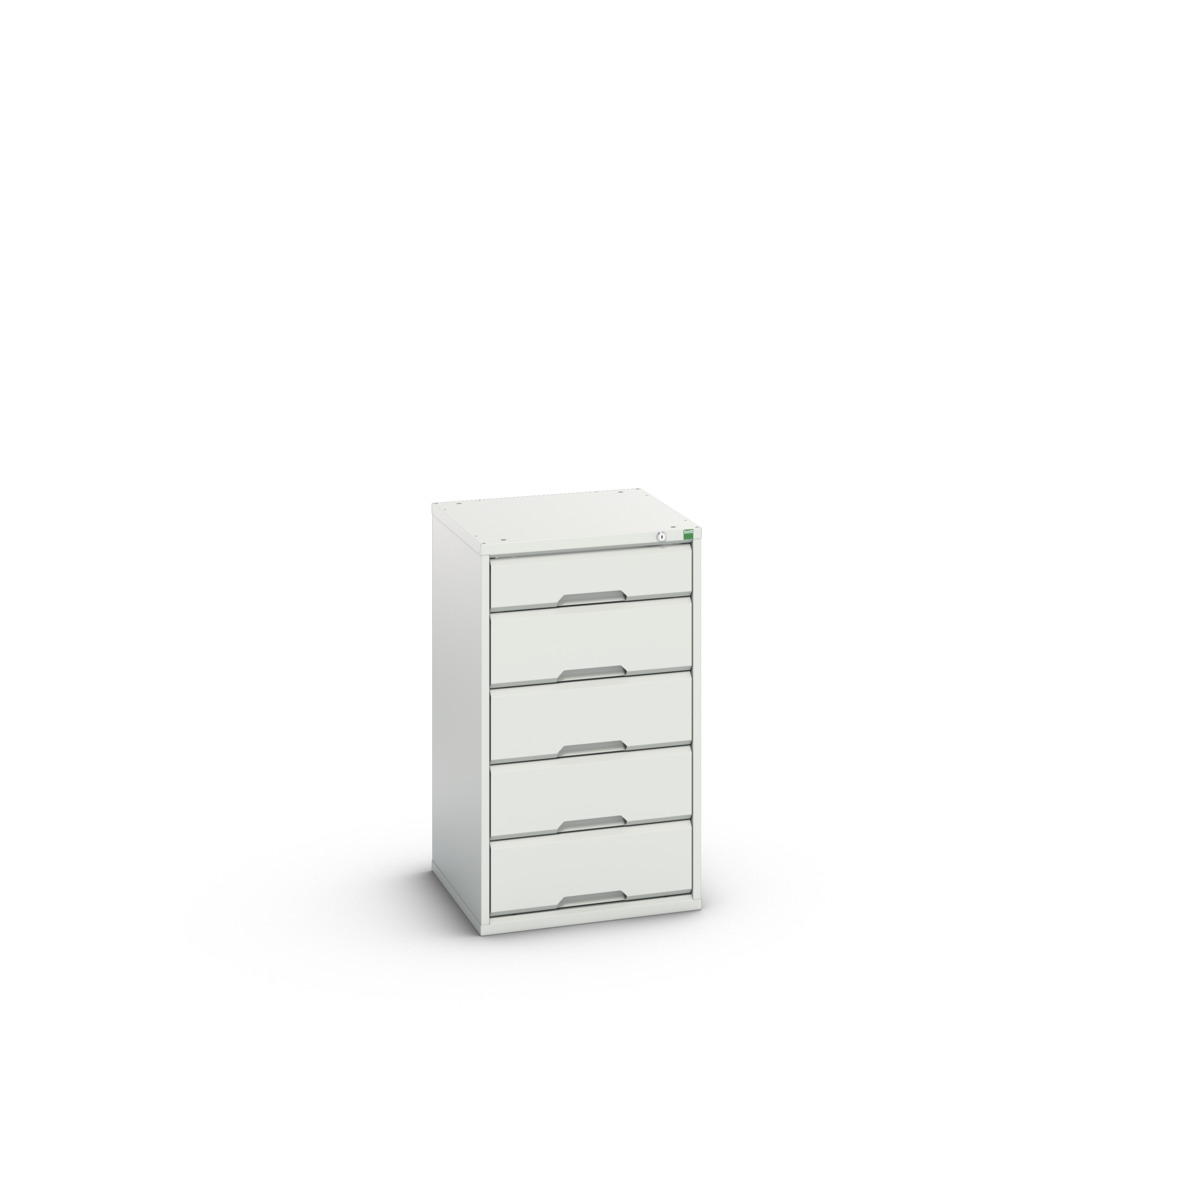 16925017.16 - verso drawer cabinet